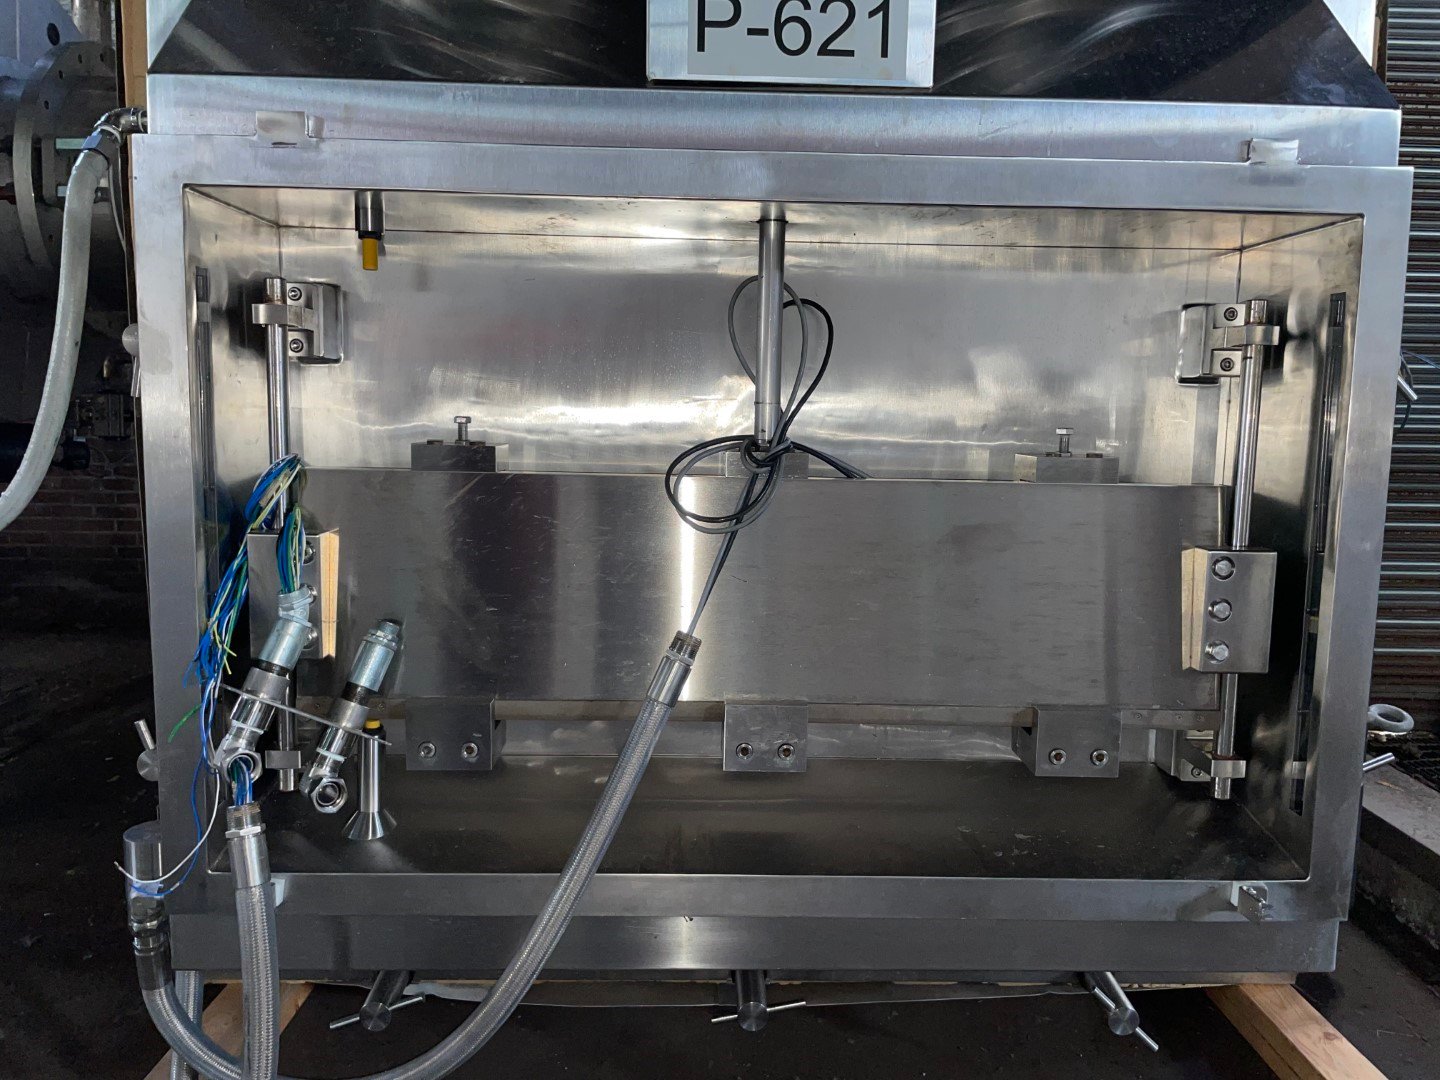 108 Sq Ft SP Scientific Hull Lyophilizer Freeze Dryer